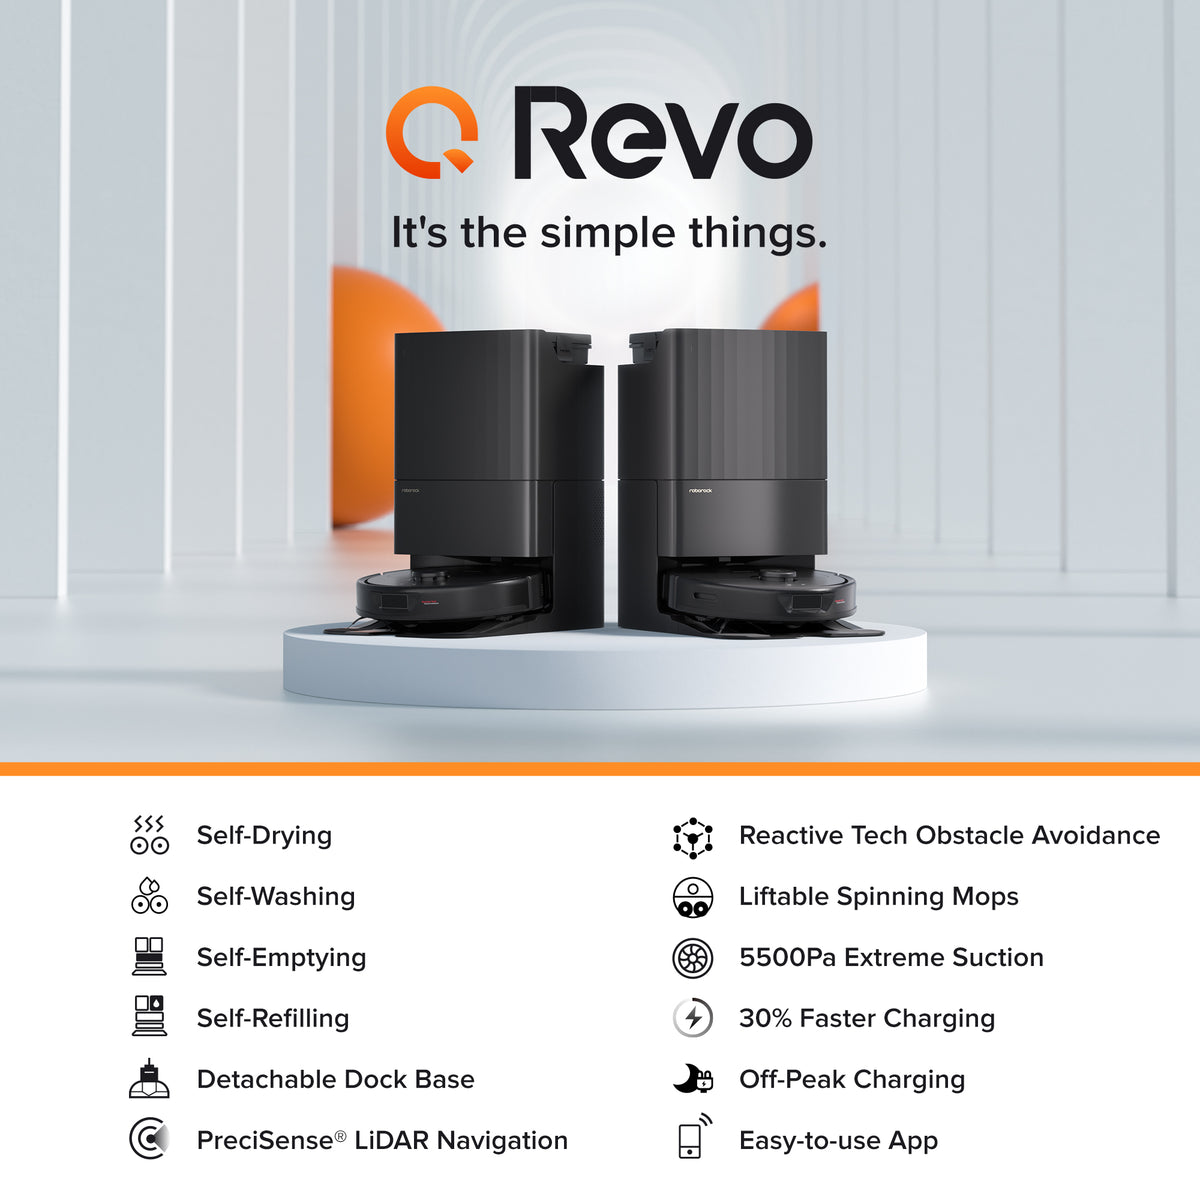 Roborock Q Revo comes with rotating mops